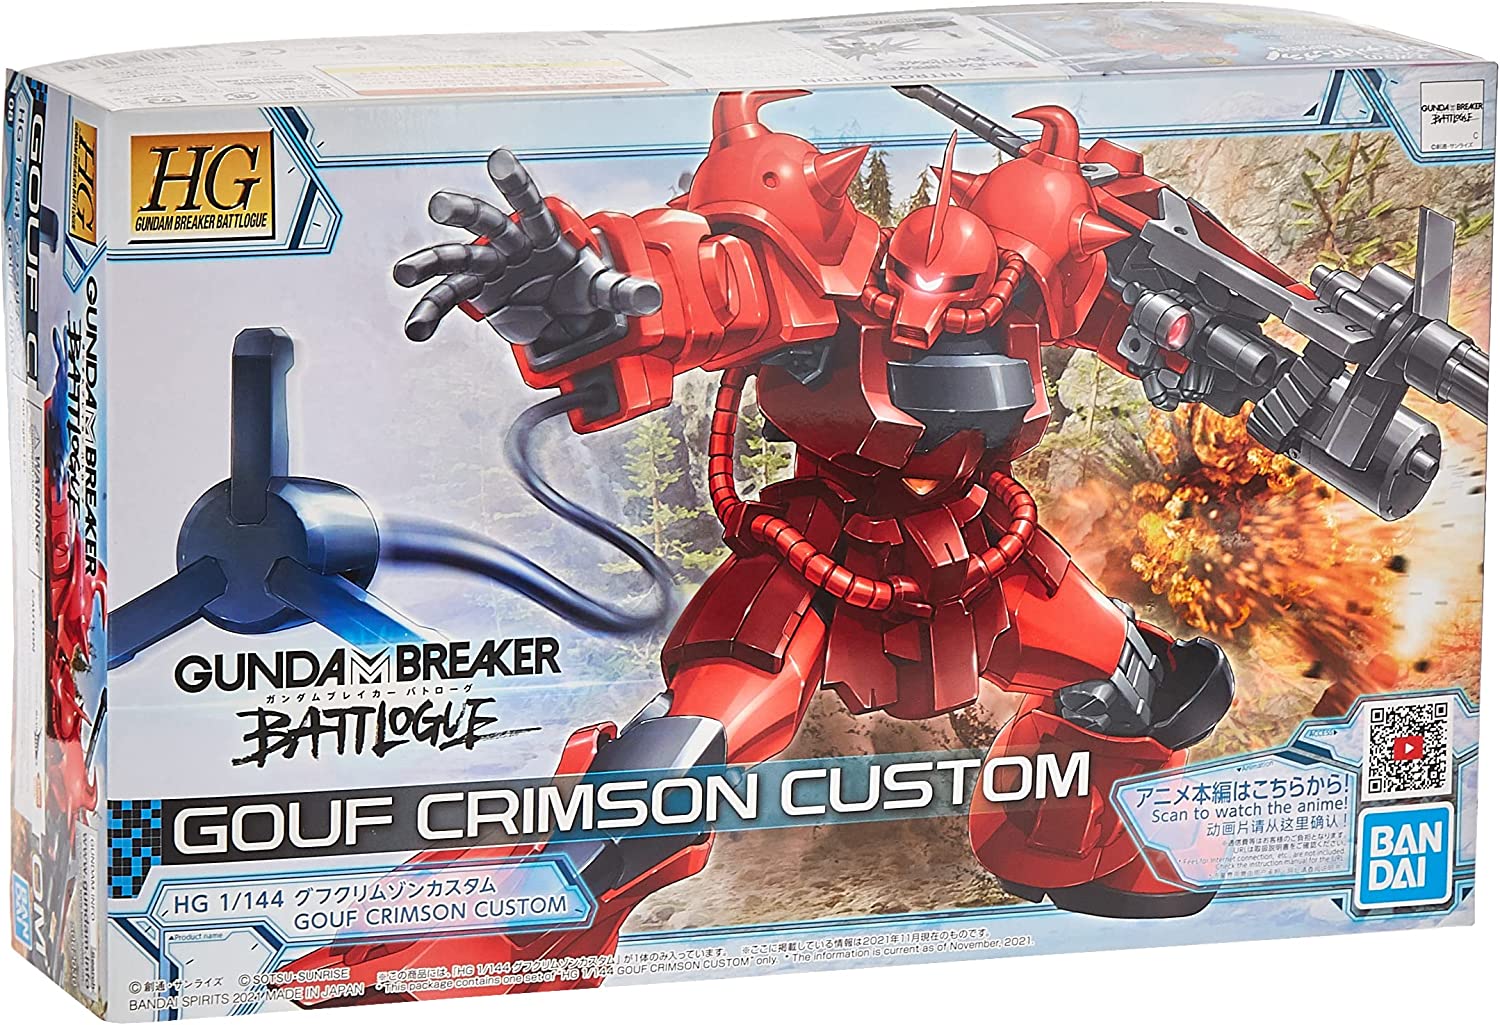 Bandai Hobby HG 1/144 - Gundam Breaker Battlogue Gouf Crimson Custom